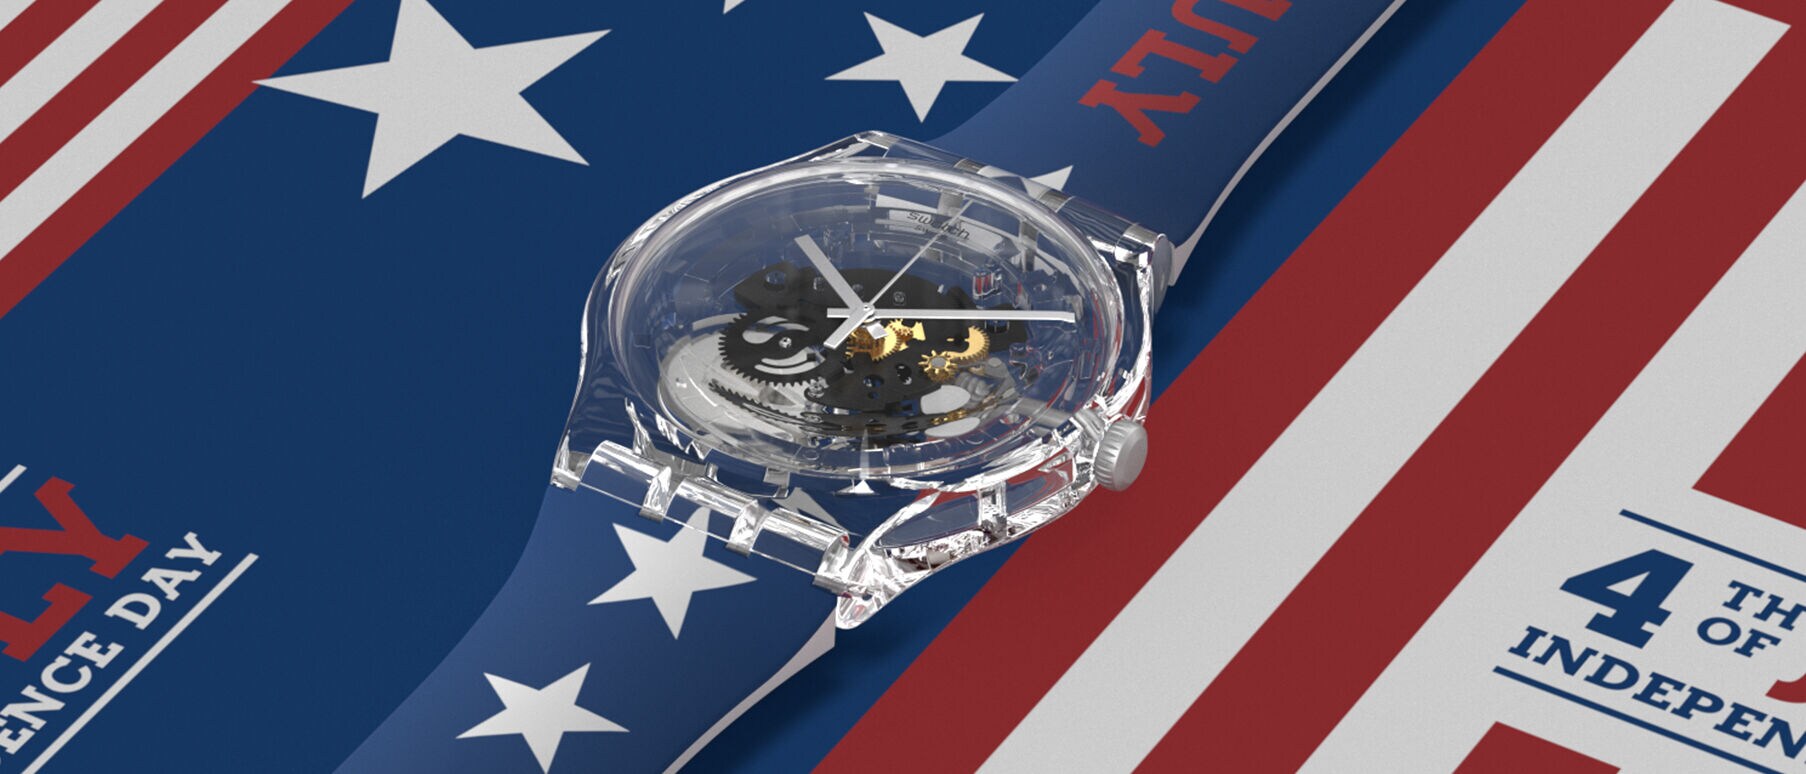 Personalized watch with USA pattern